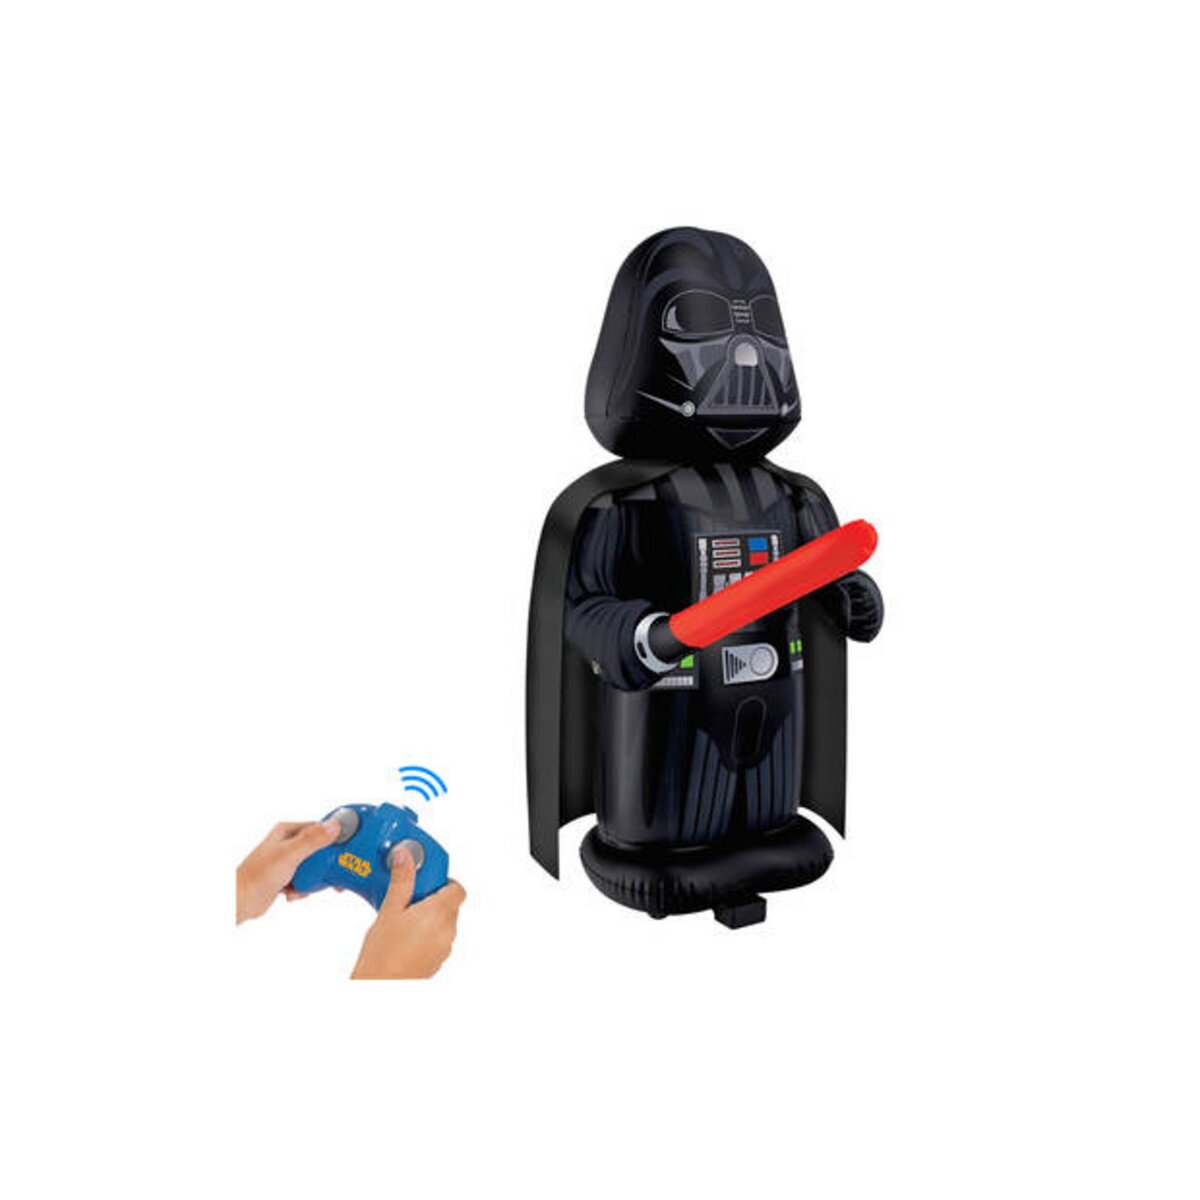 STAR WARS - Figurine Darth Vader gonflable sonore radiocommandée